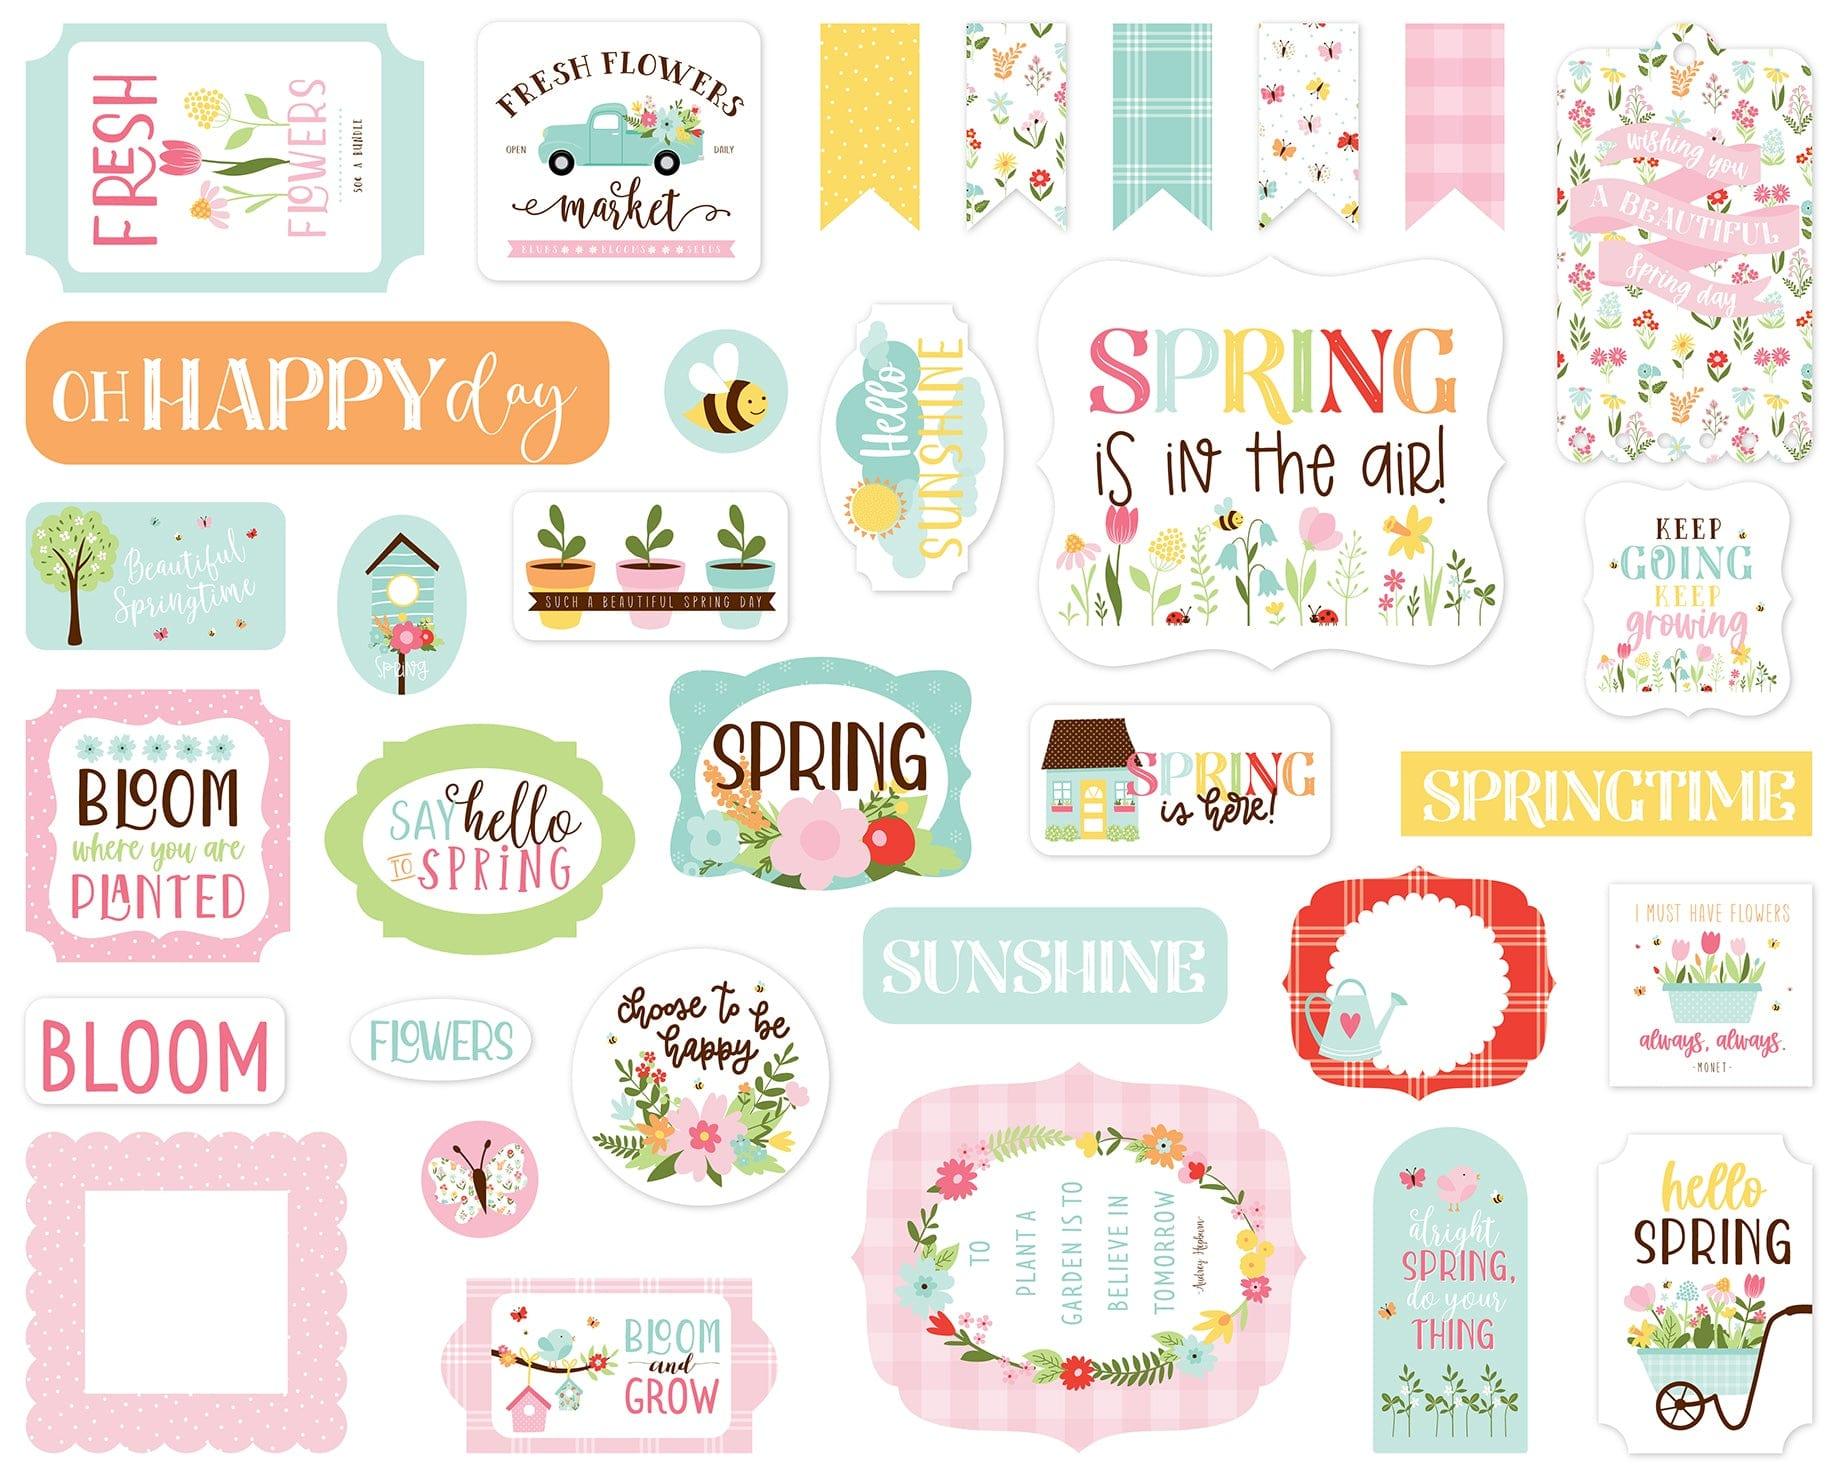 Welcome Spring Collection 5 x 5 Ephemera Die Cut Scrapbook Embellishments by Echo Park Paper - Scrapbook Supply Companies